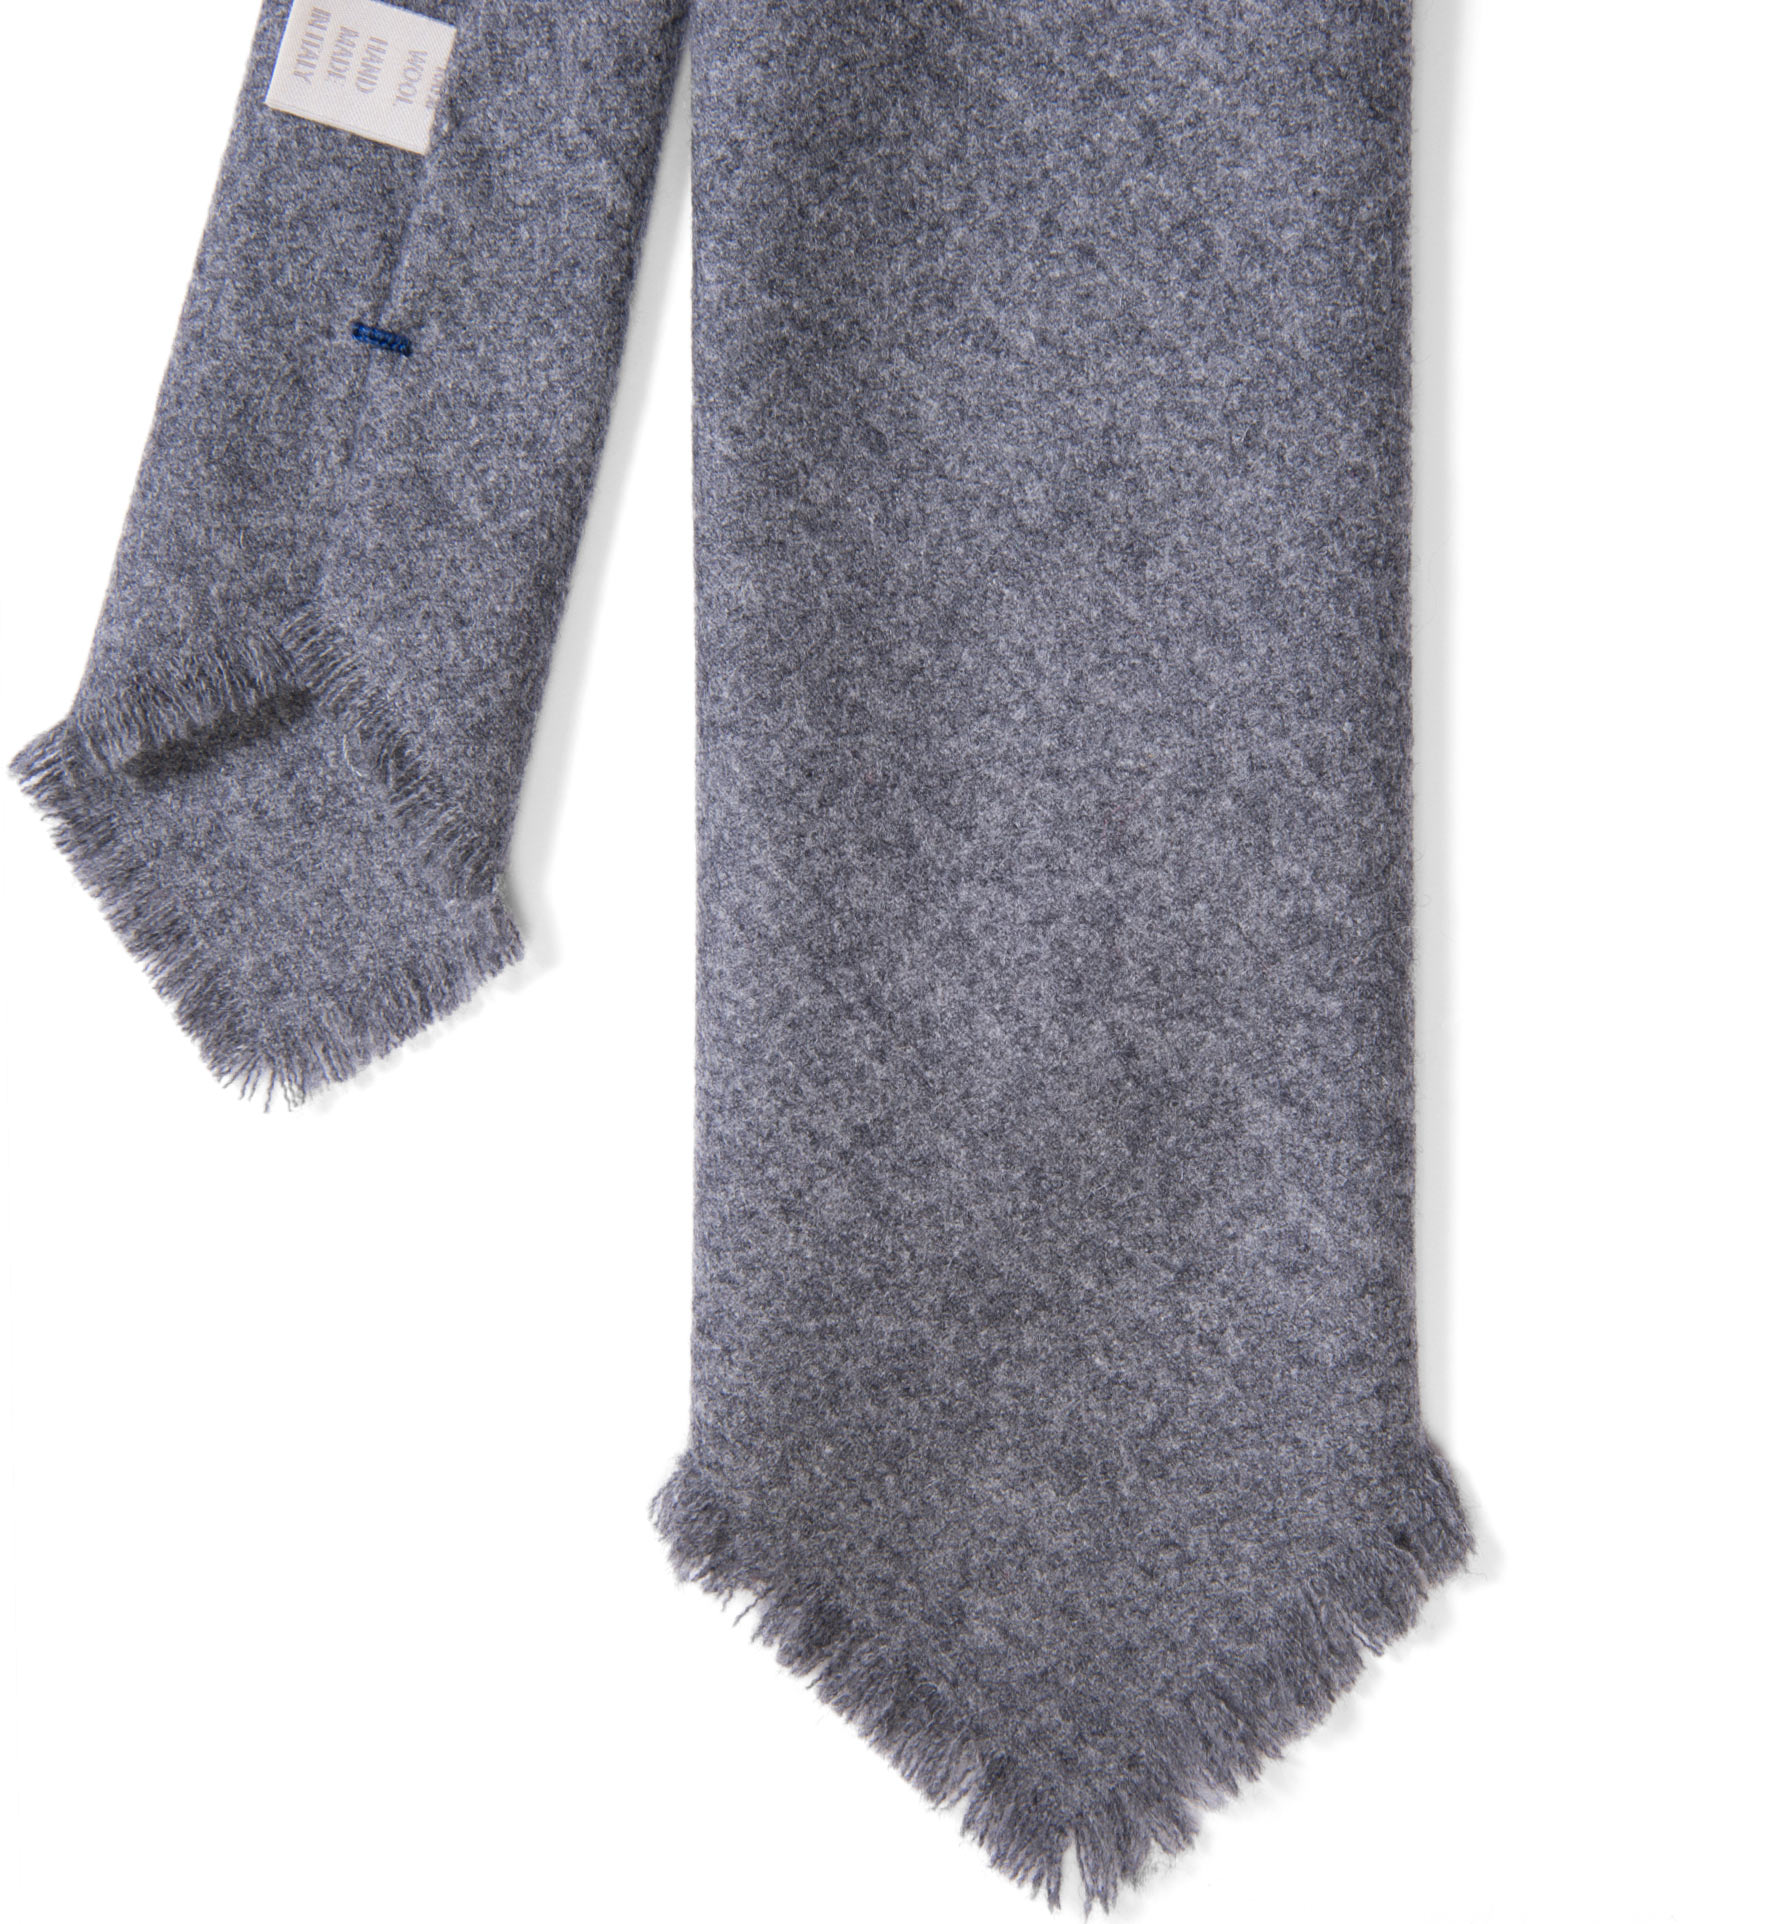 Corvara Grey Frayed Wool Tie by Proper Cloth